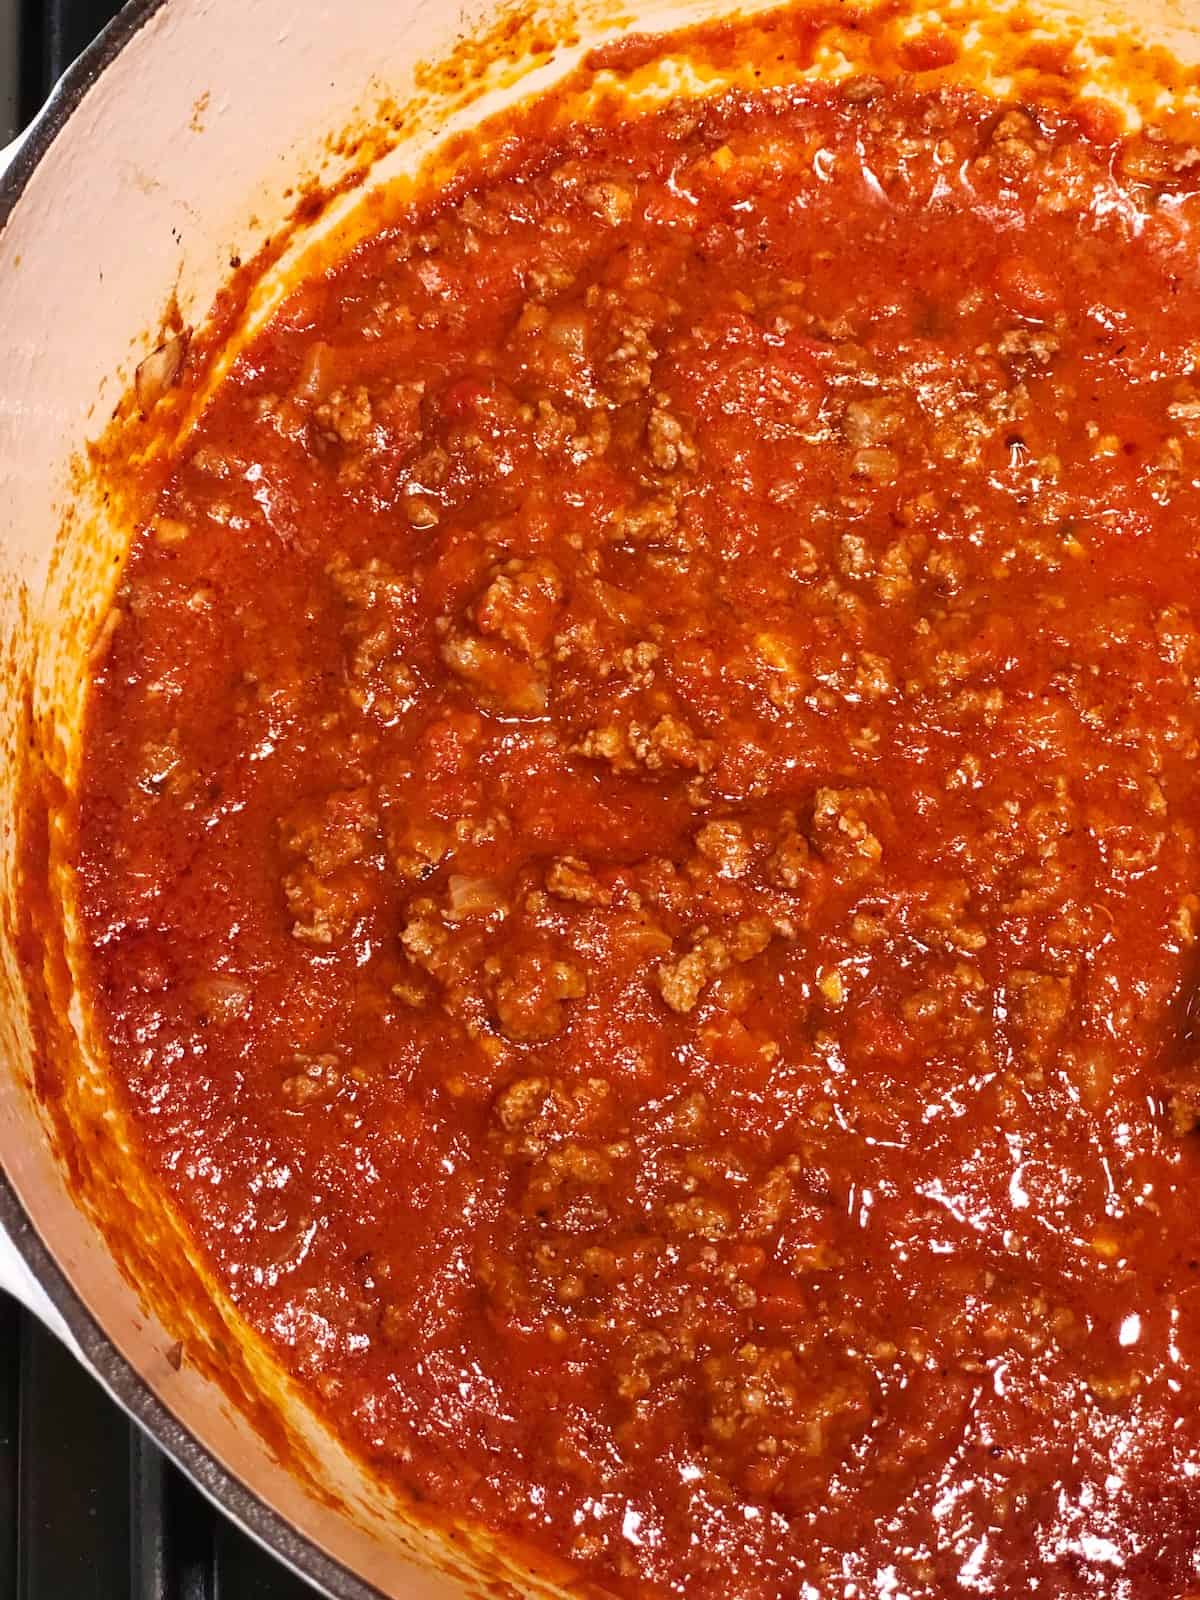 Perfect Italian meat sauce simmering